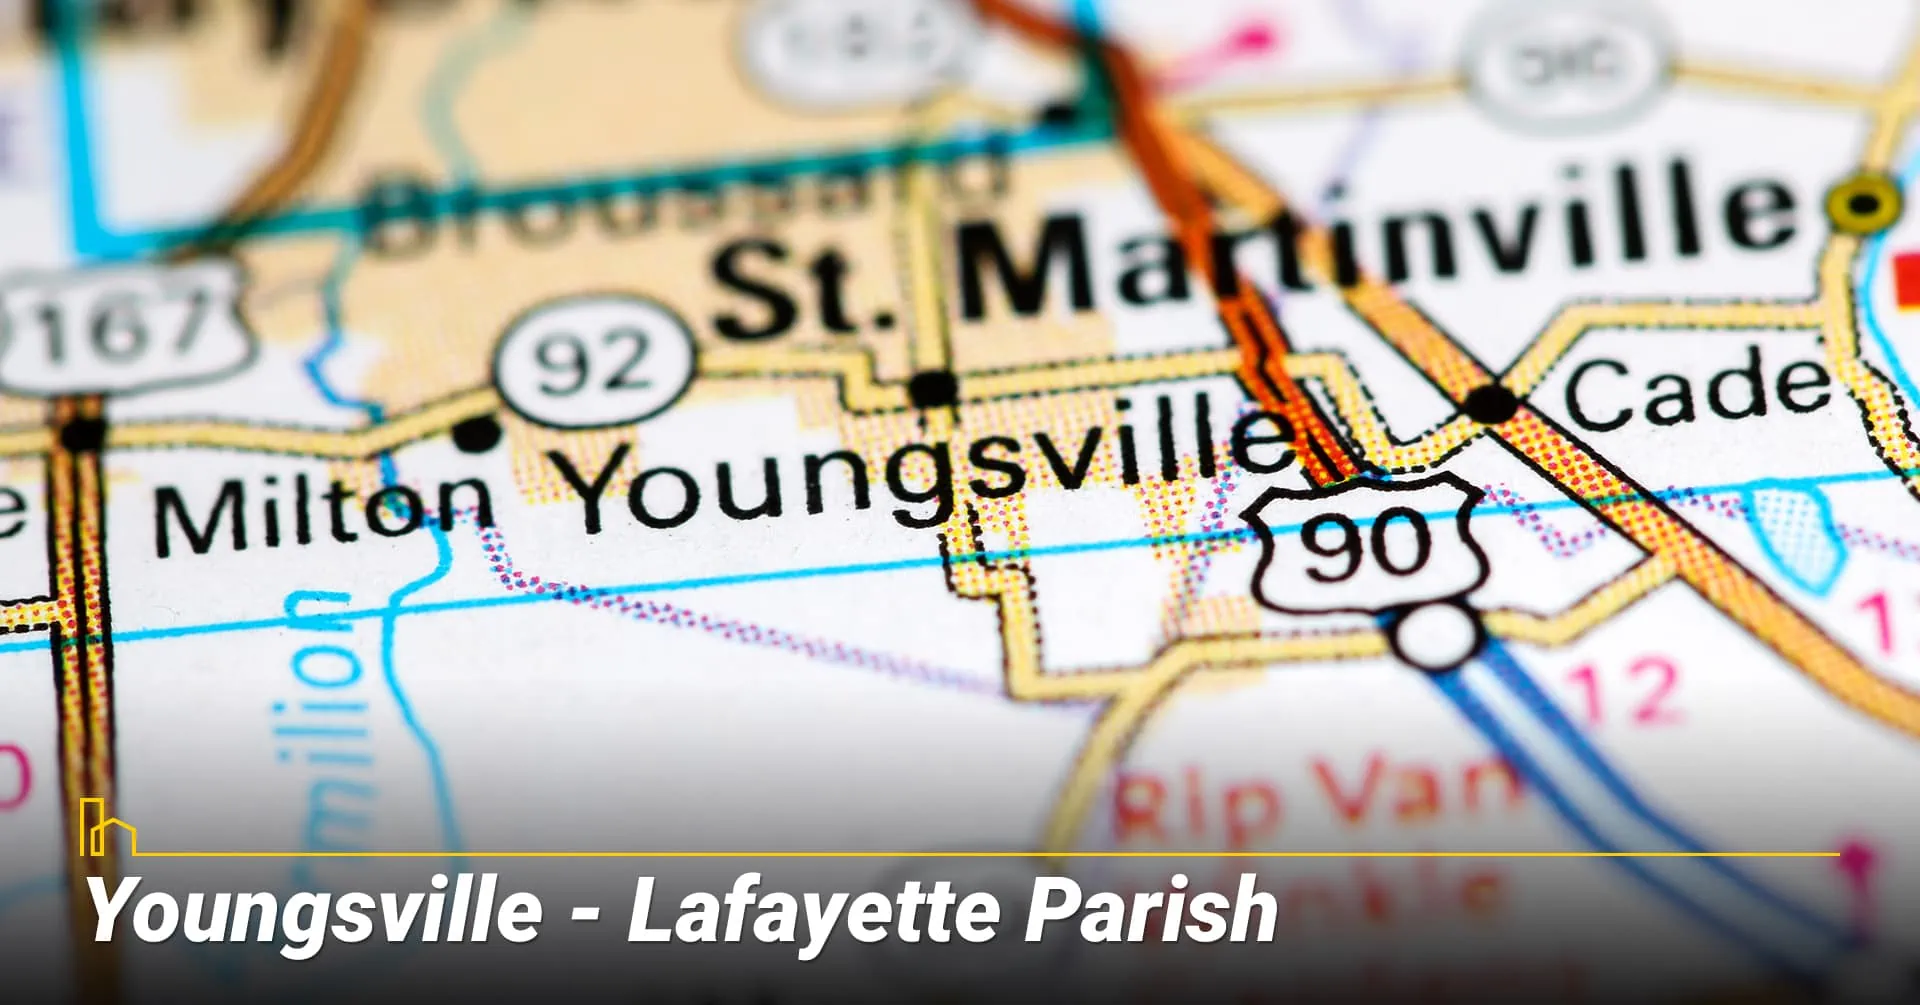 Youngsville - Lafayette Parish